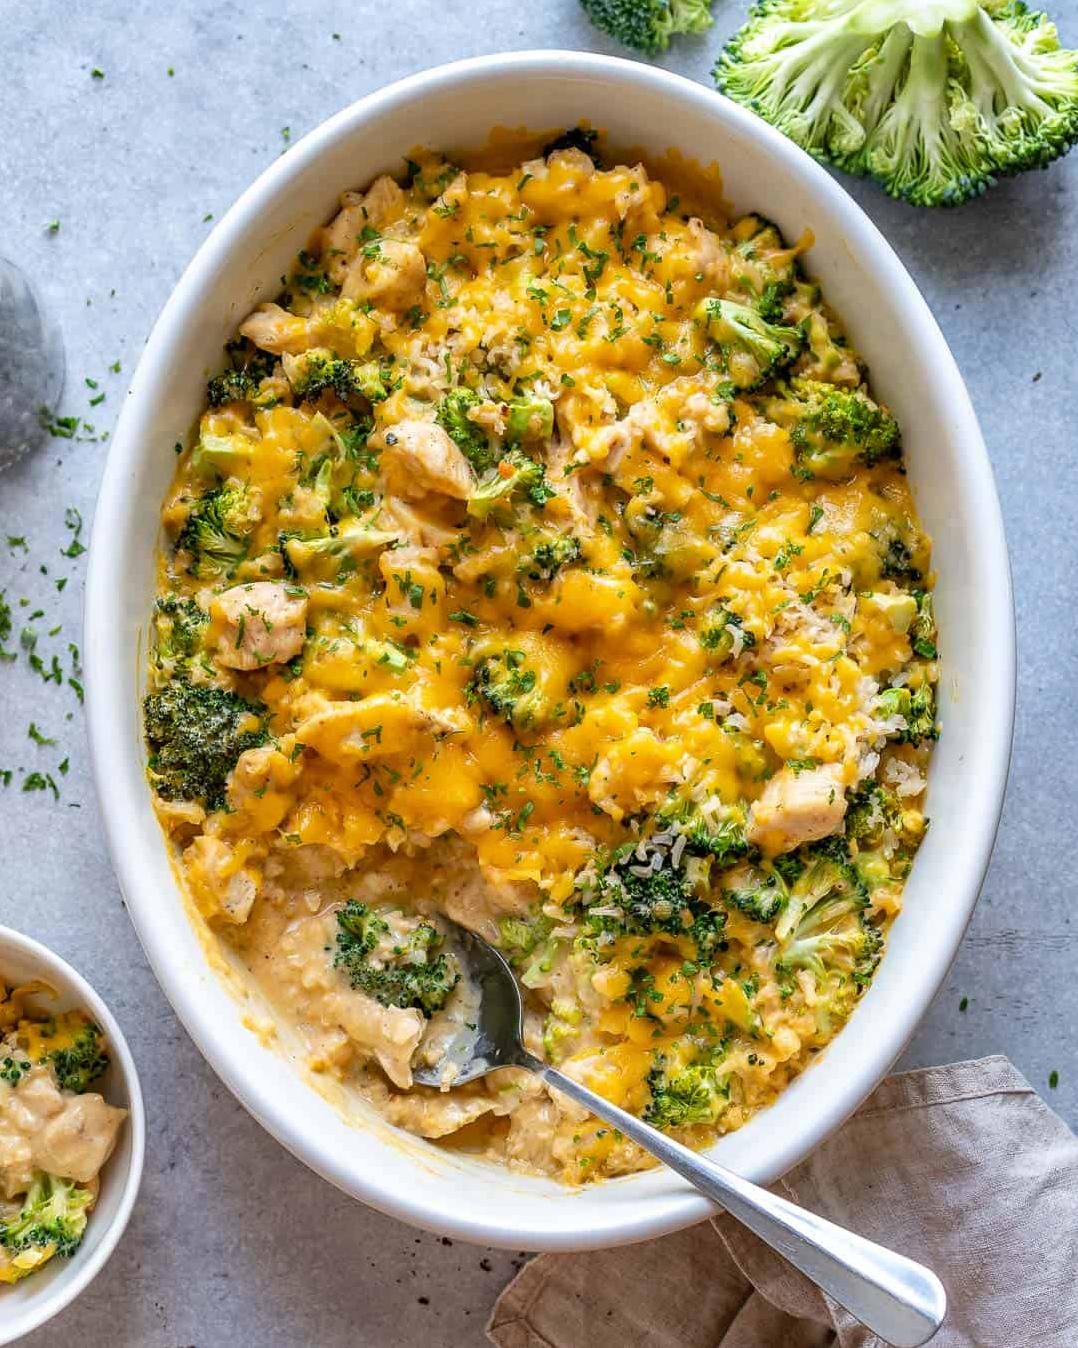  Say hello to this gluten-free broccoli chicken dish!